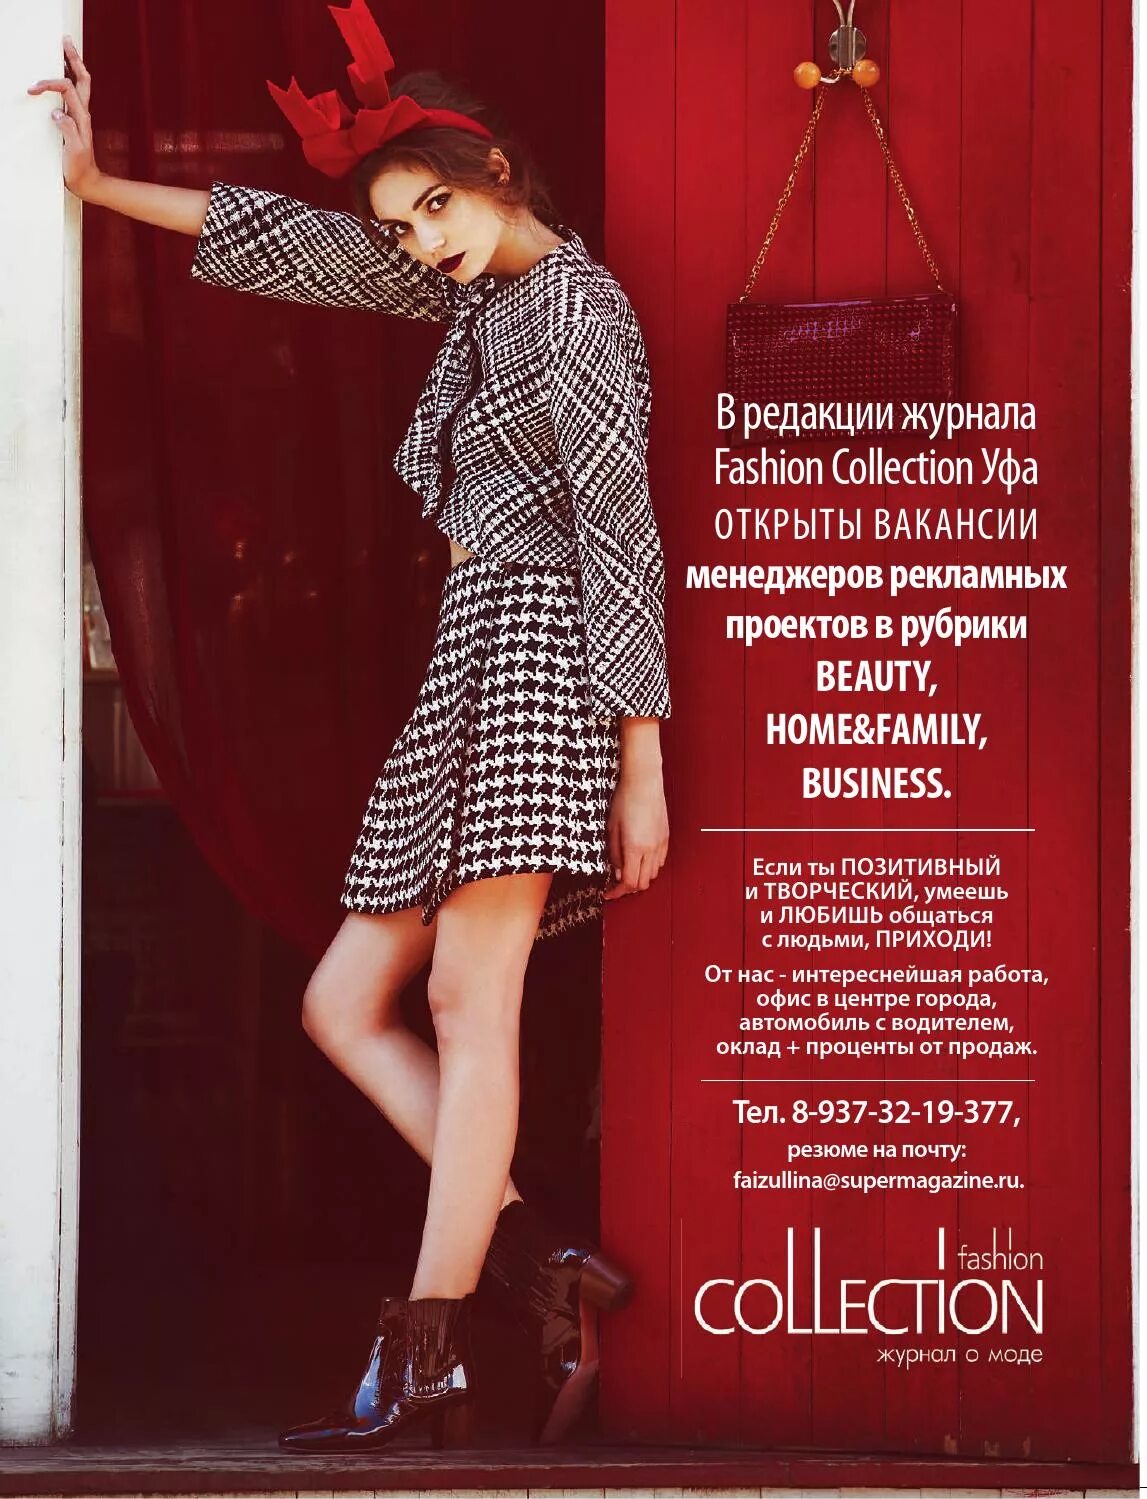 Collection журнал. Журнал collection. Журнал фэшн бизнес. Fashion collection офис. Модная коллекция женской одежды книга.